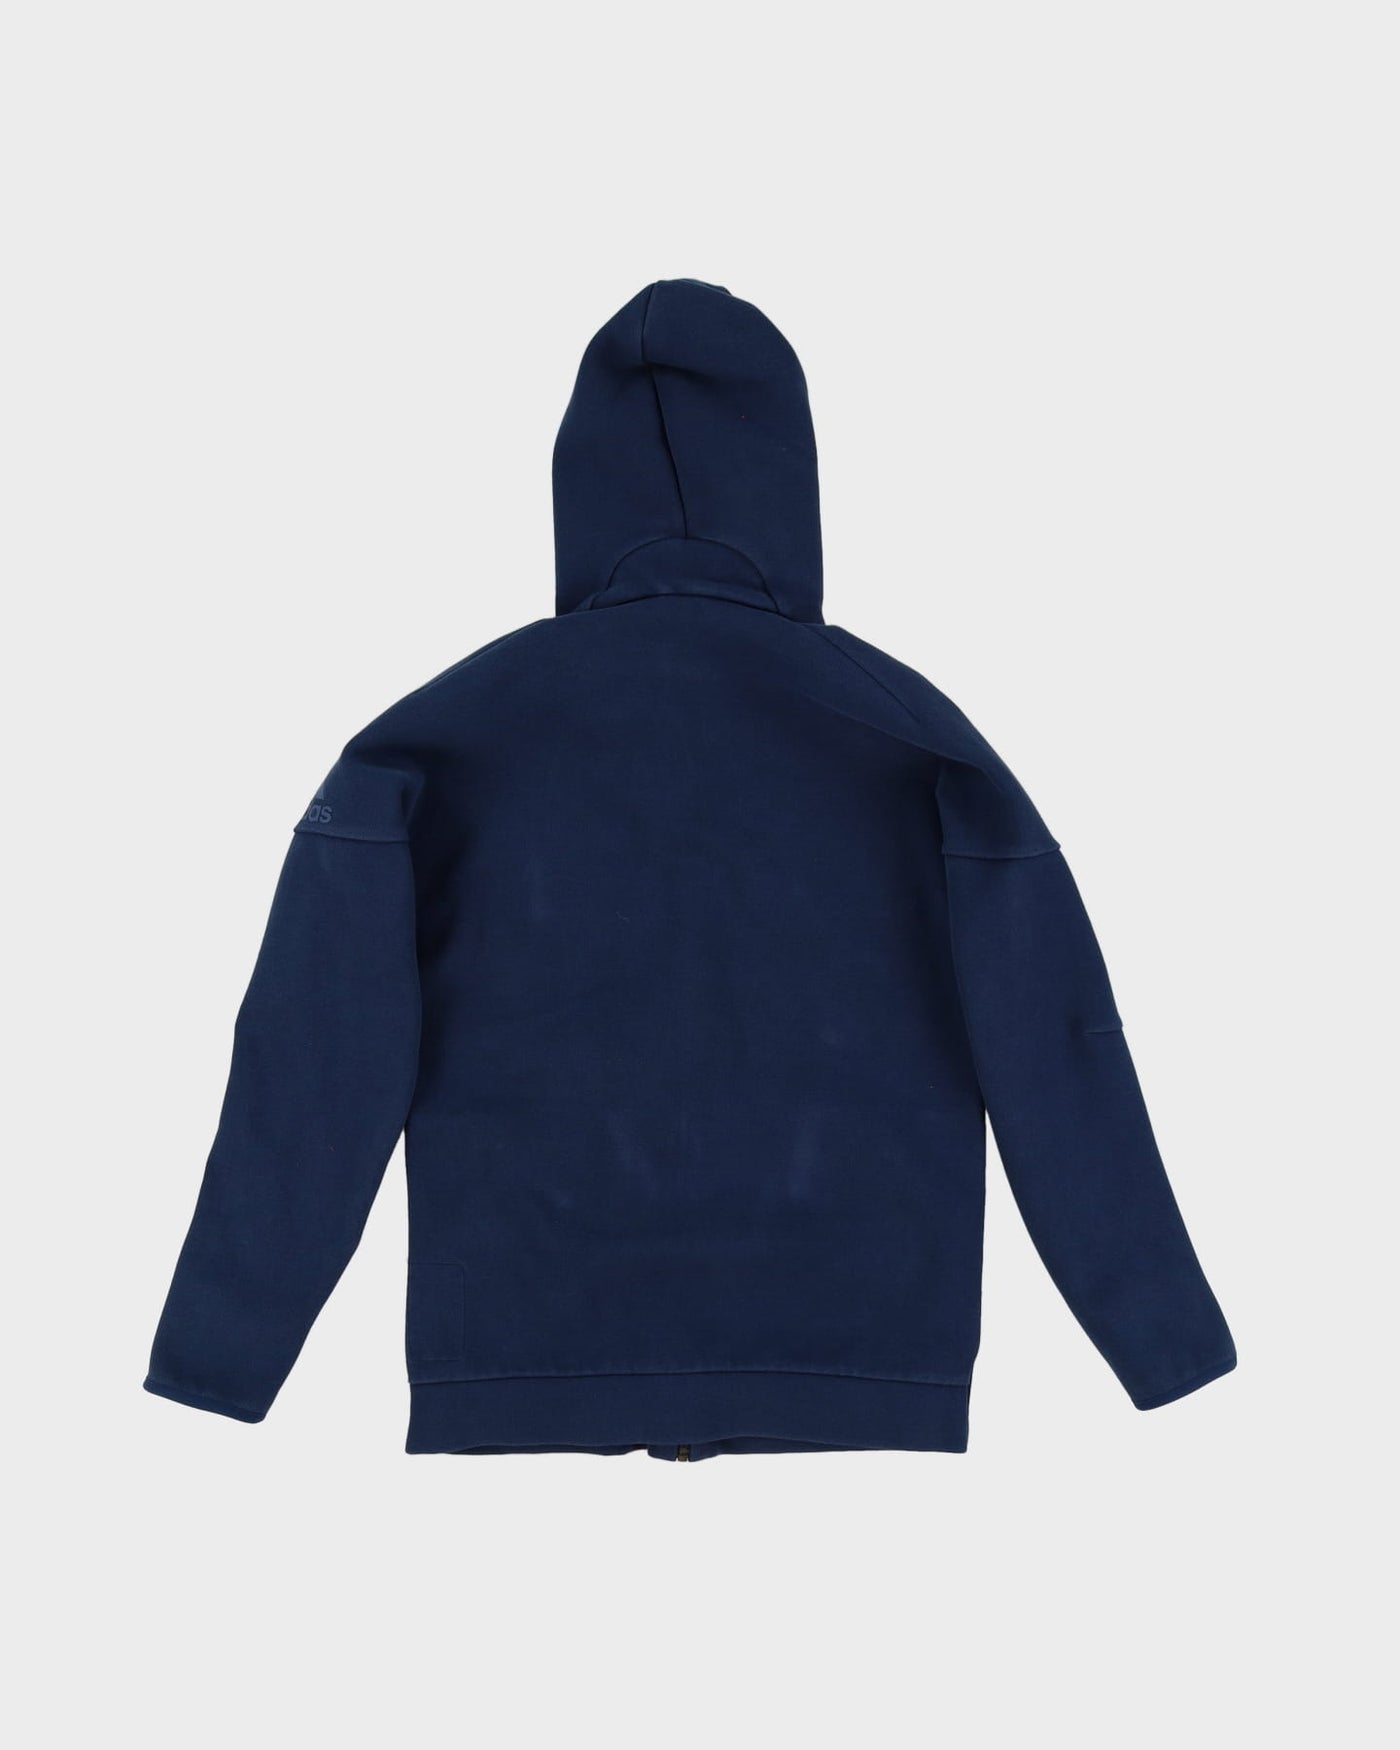 Adidas Blue / Navy Hooded Zip-Up Sweatshirt - L